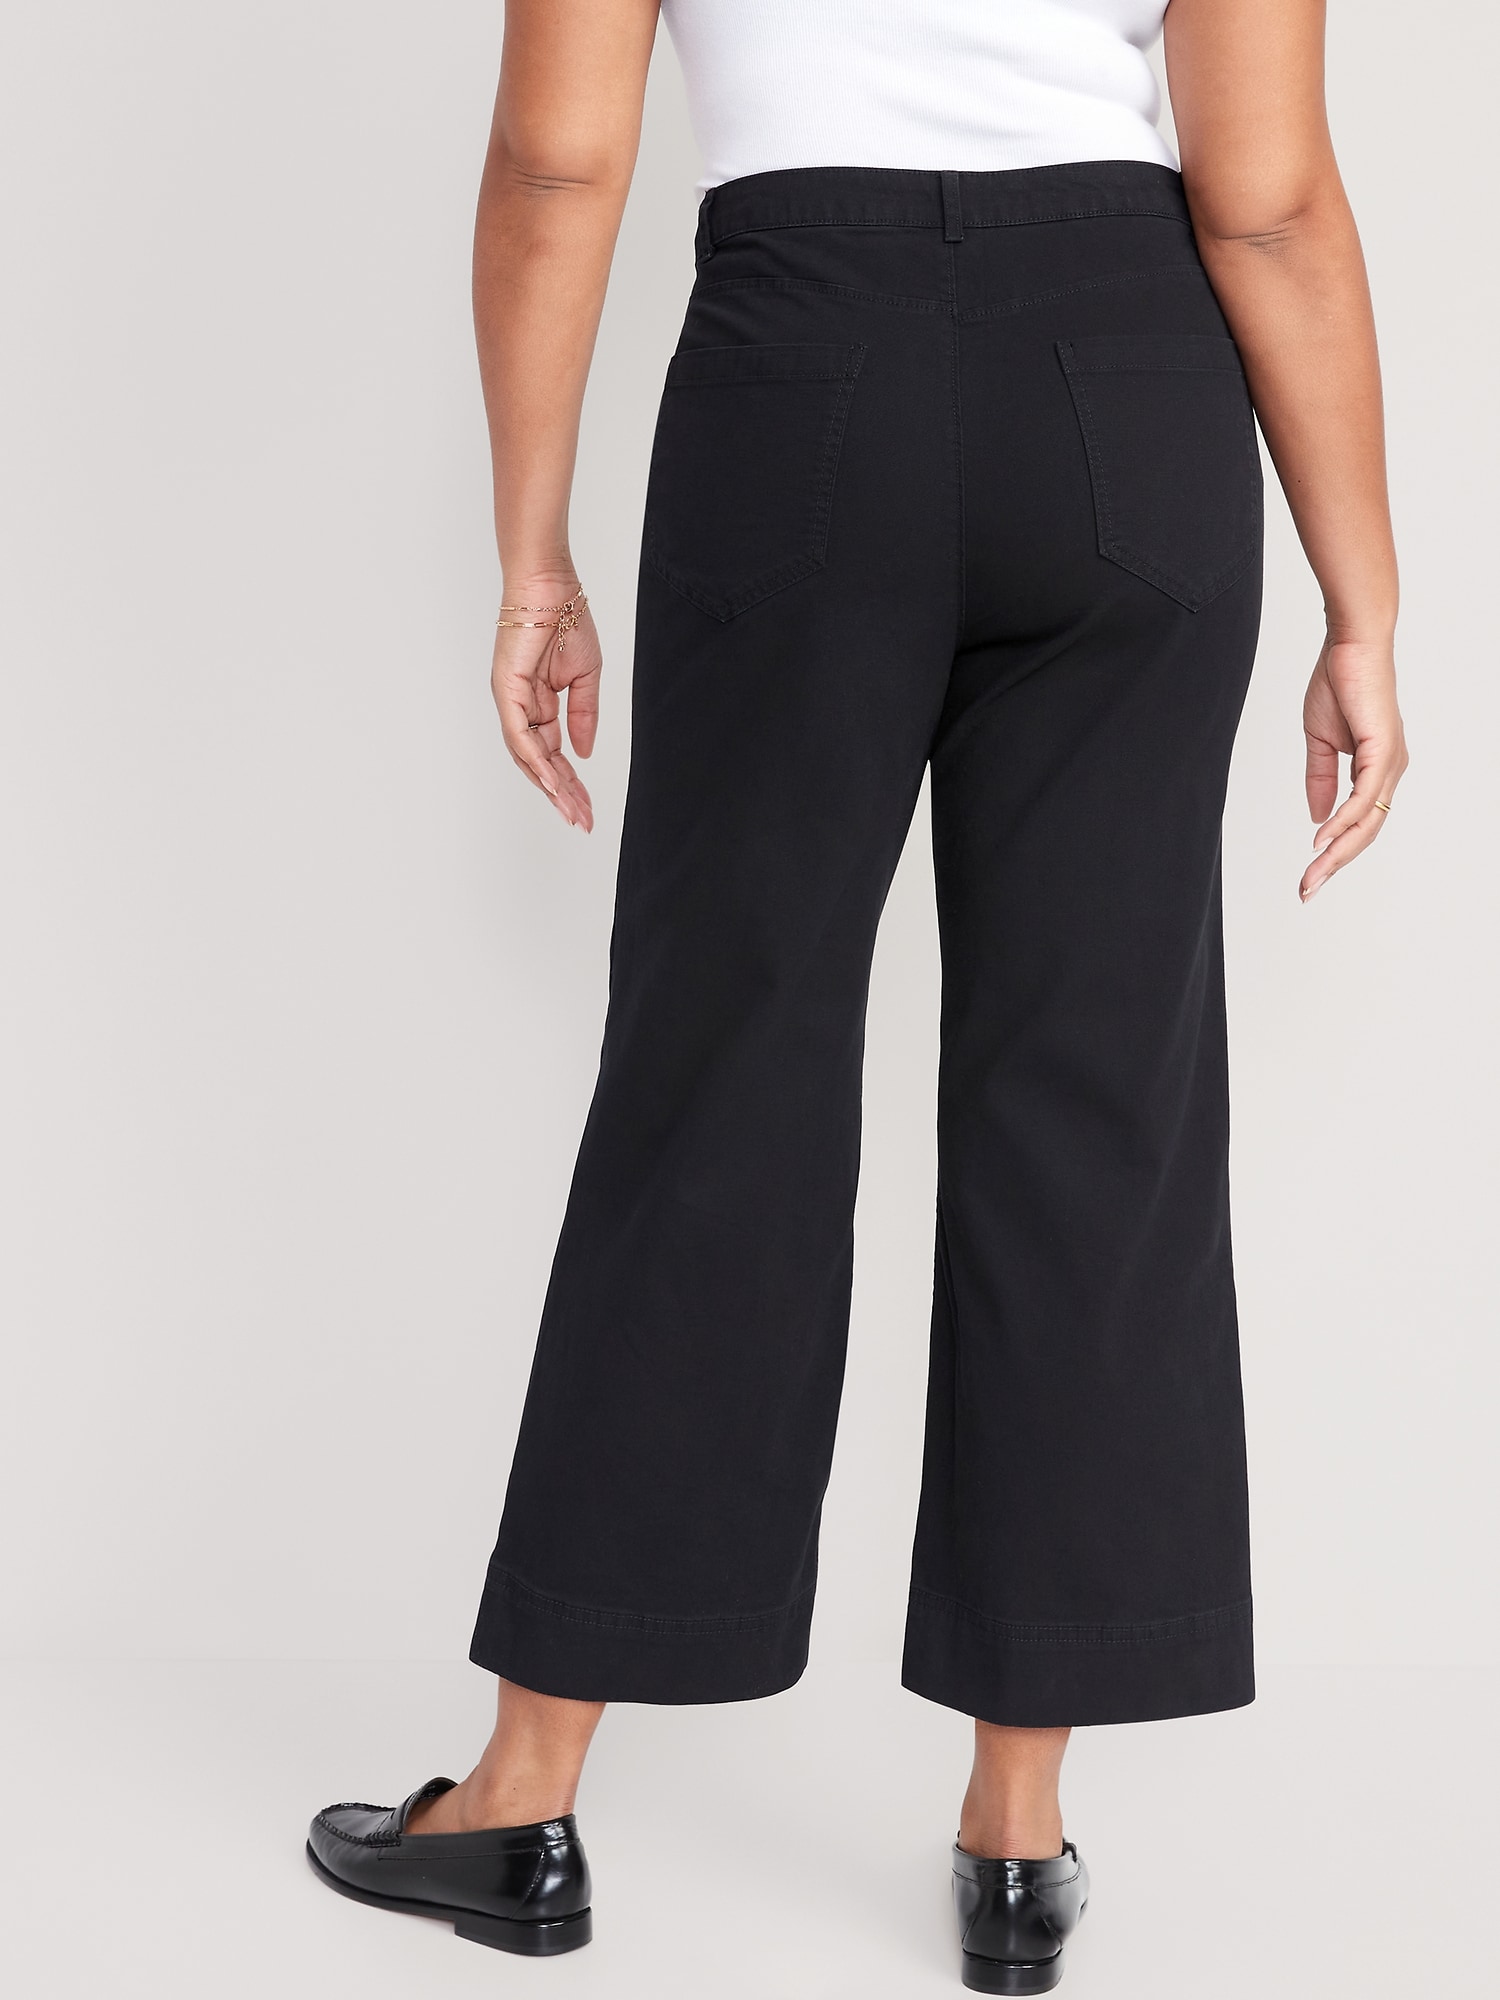 NIMIN Womens High Waisted Business Casual Pants Stylish Versatile Offi